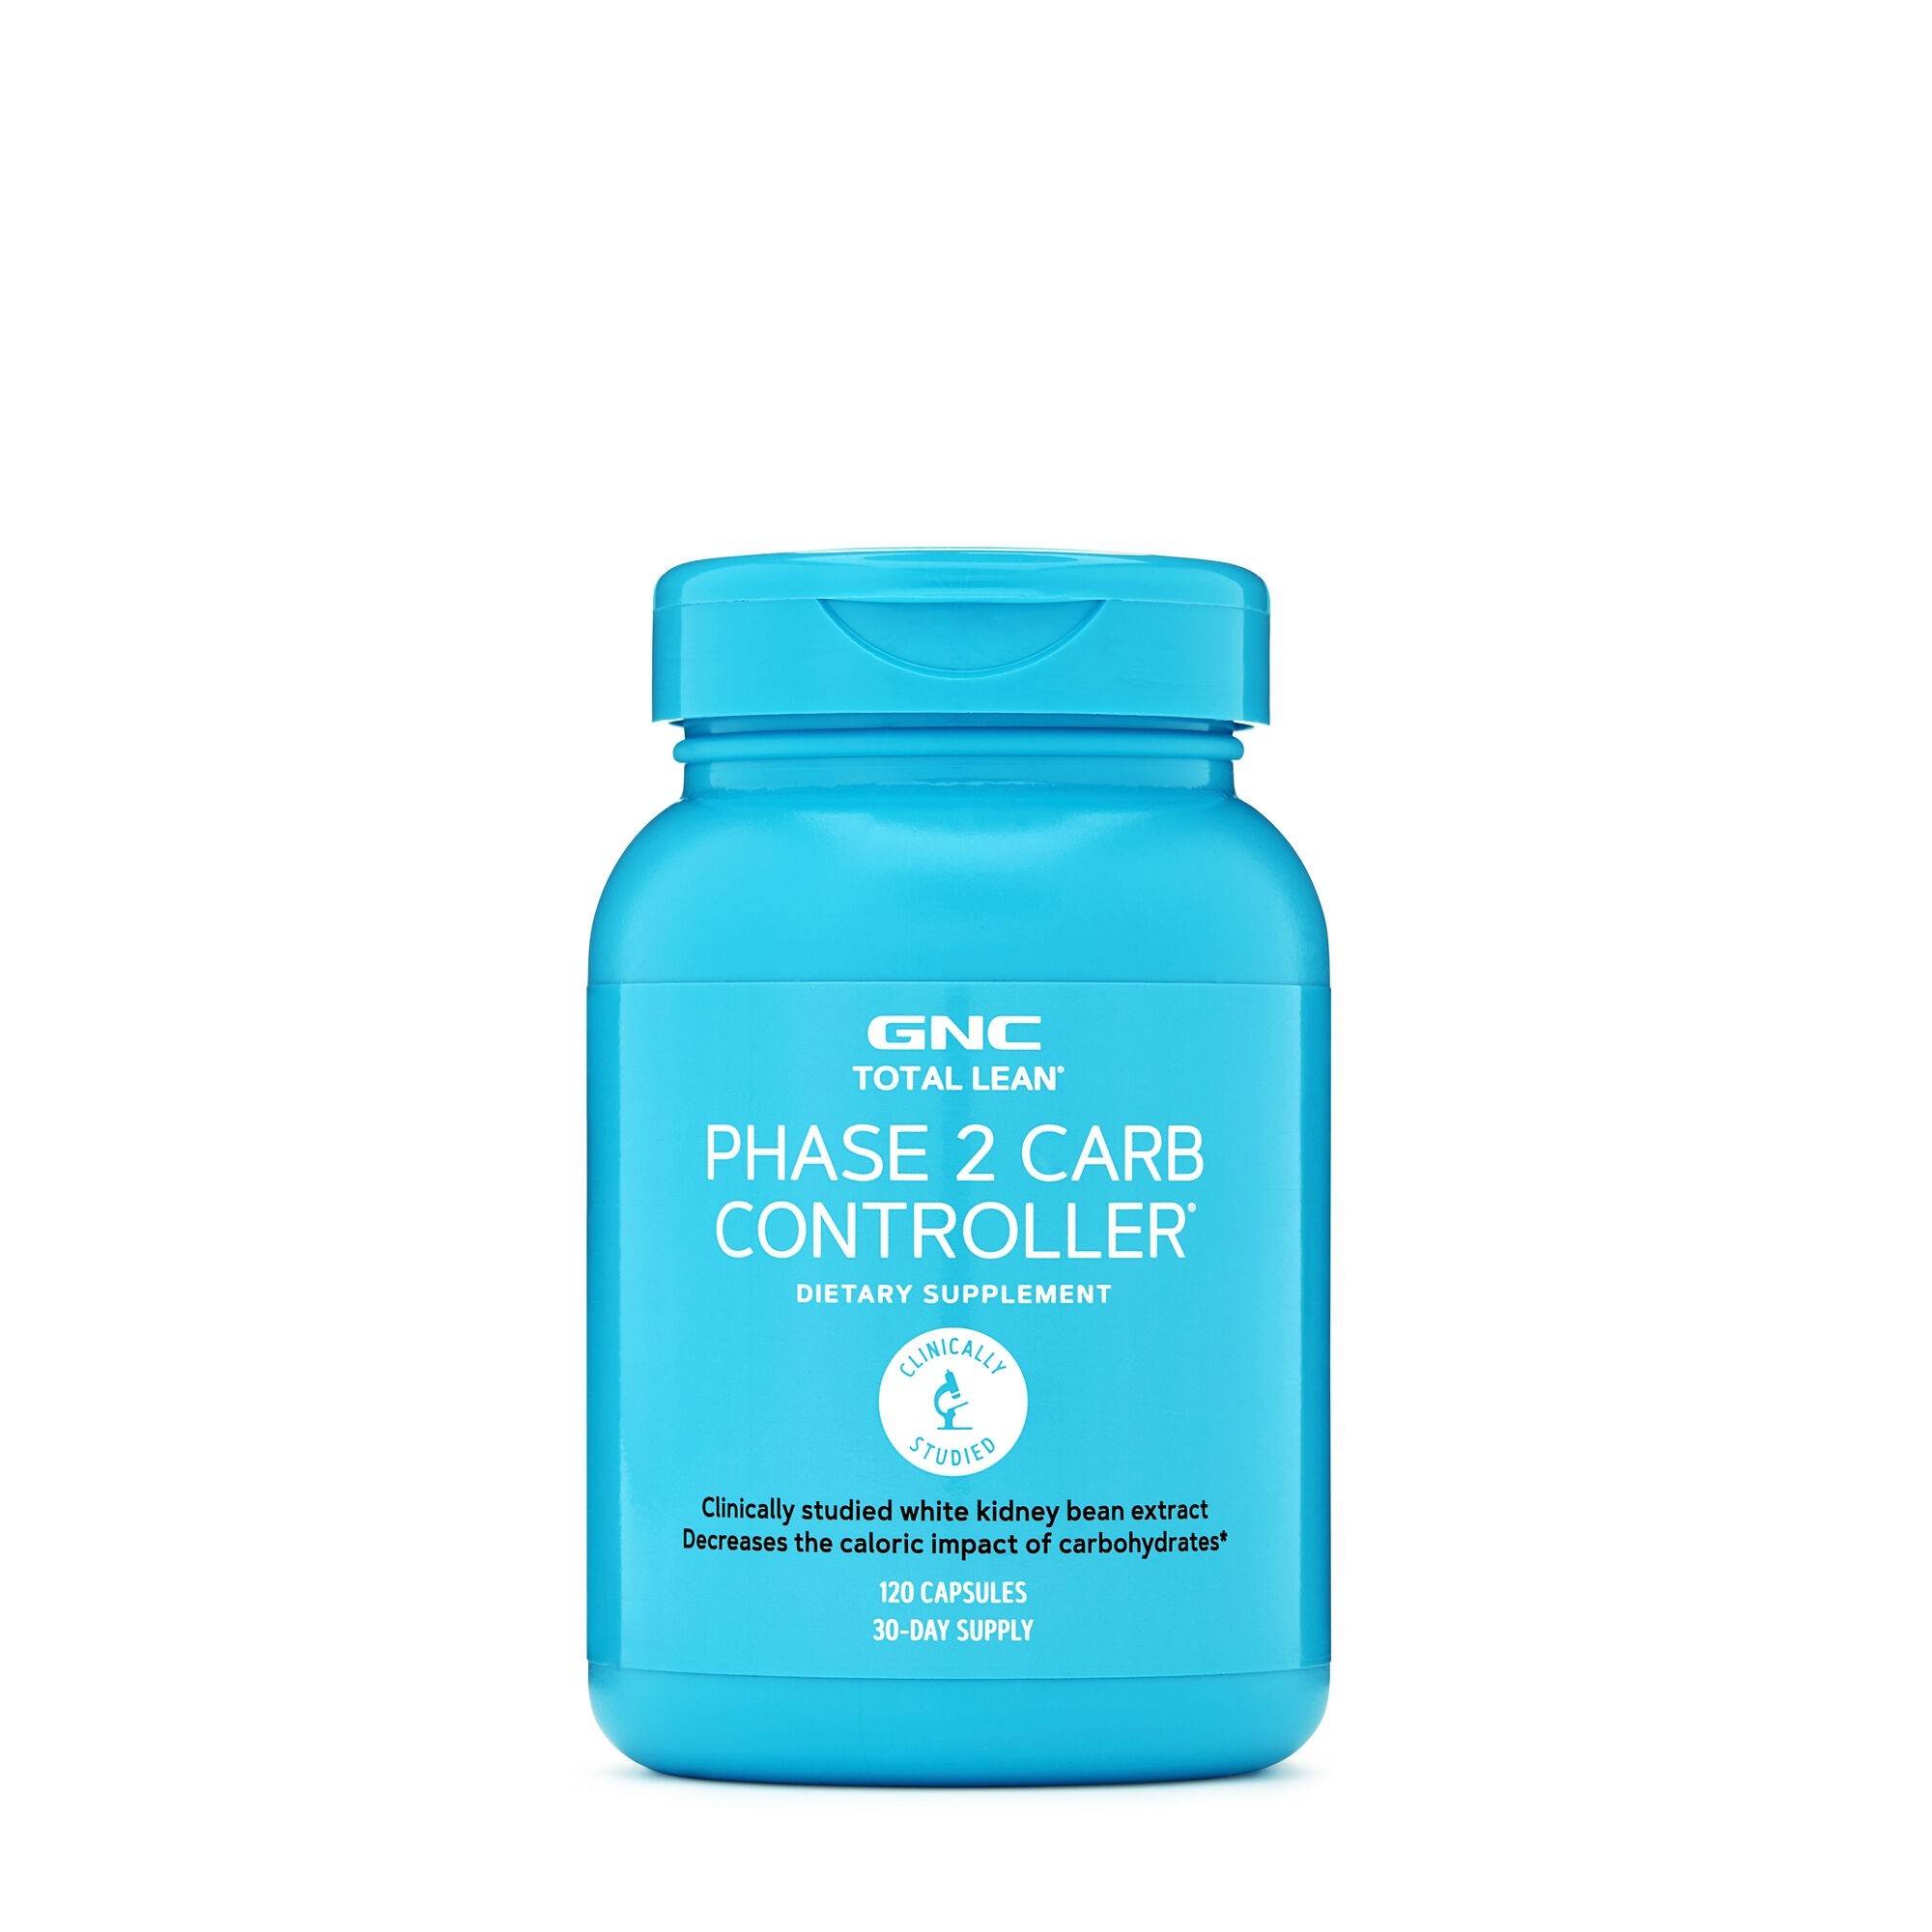 Total lean phase 2 carb controller, controlul carbohidratilor, 120cps - gnc